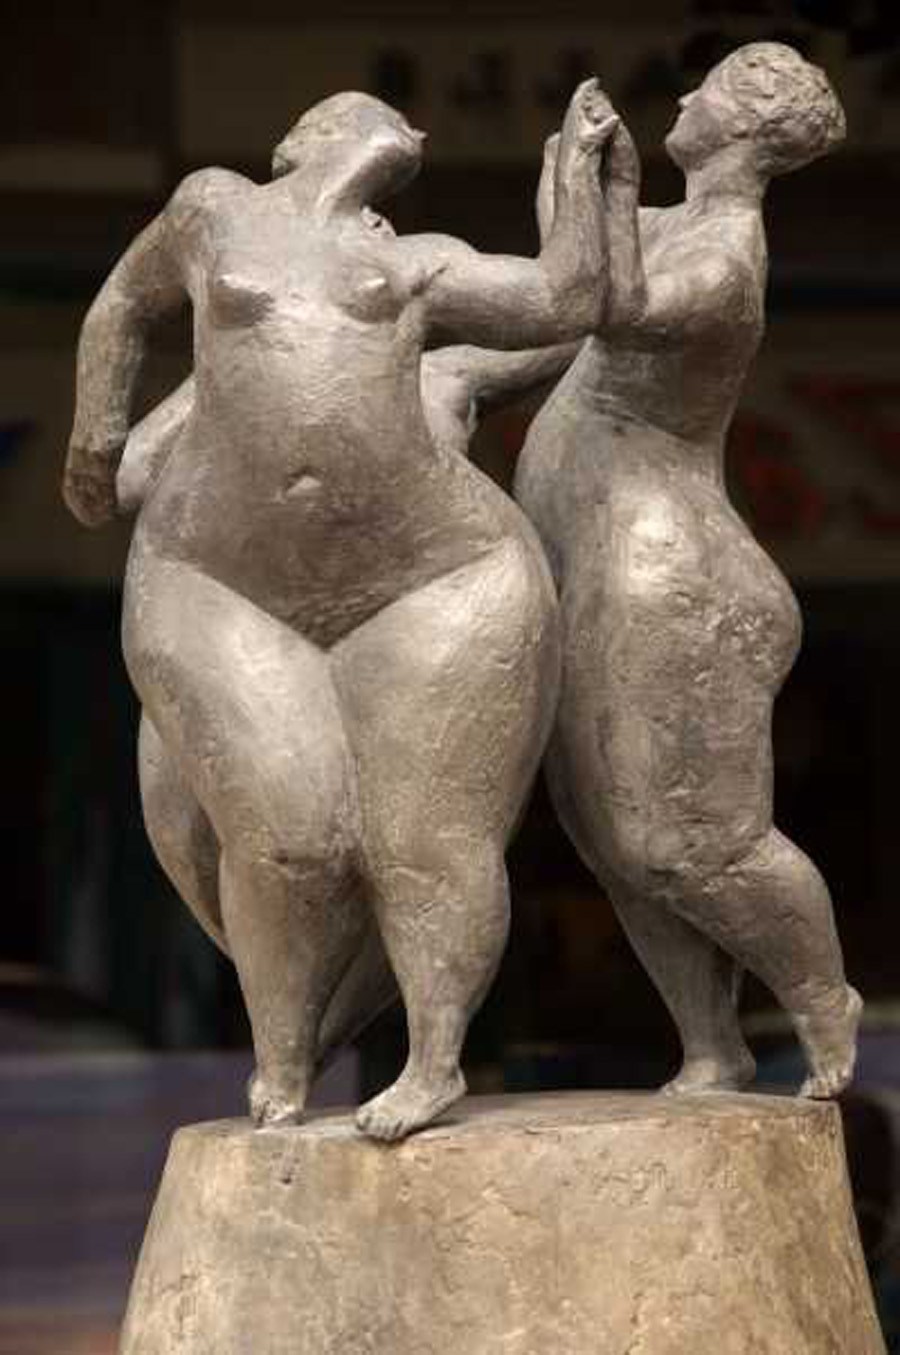 https://motherlesspics.com/uploads/posts/2023-03/1679229718_motherlesspics-com-p-porn-fat-woman-dancing-and-undressing-in-t-46.jpg